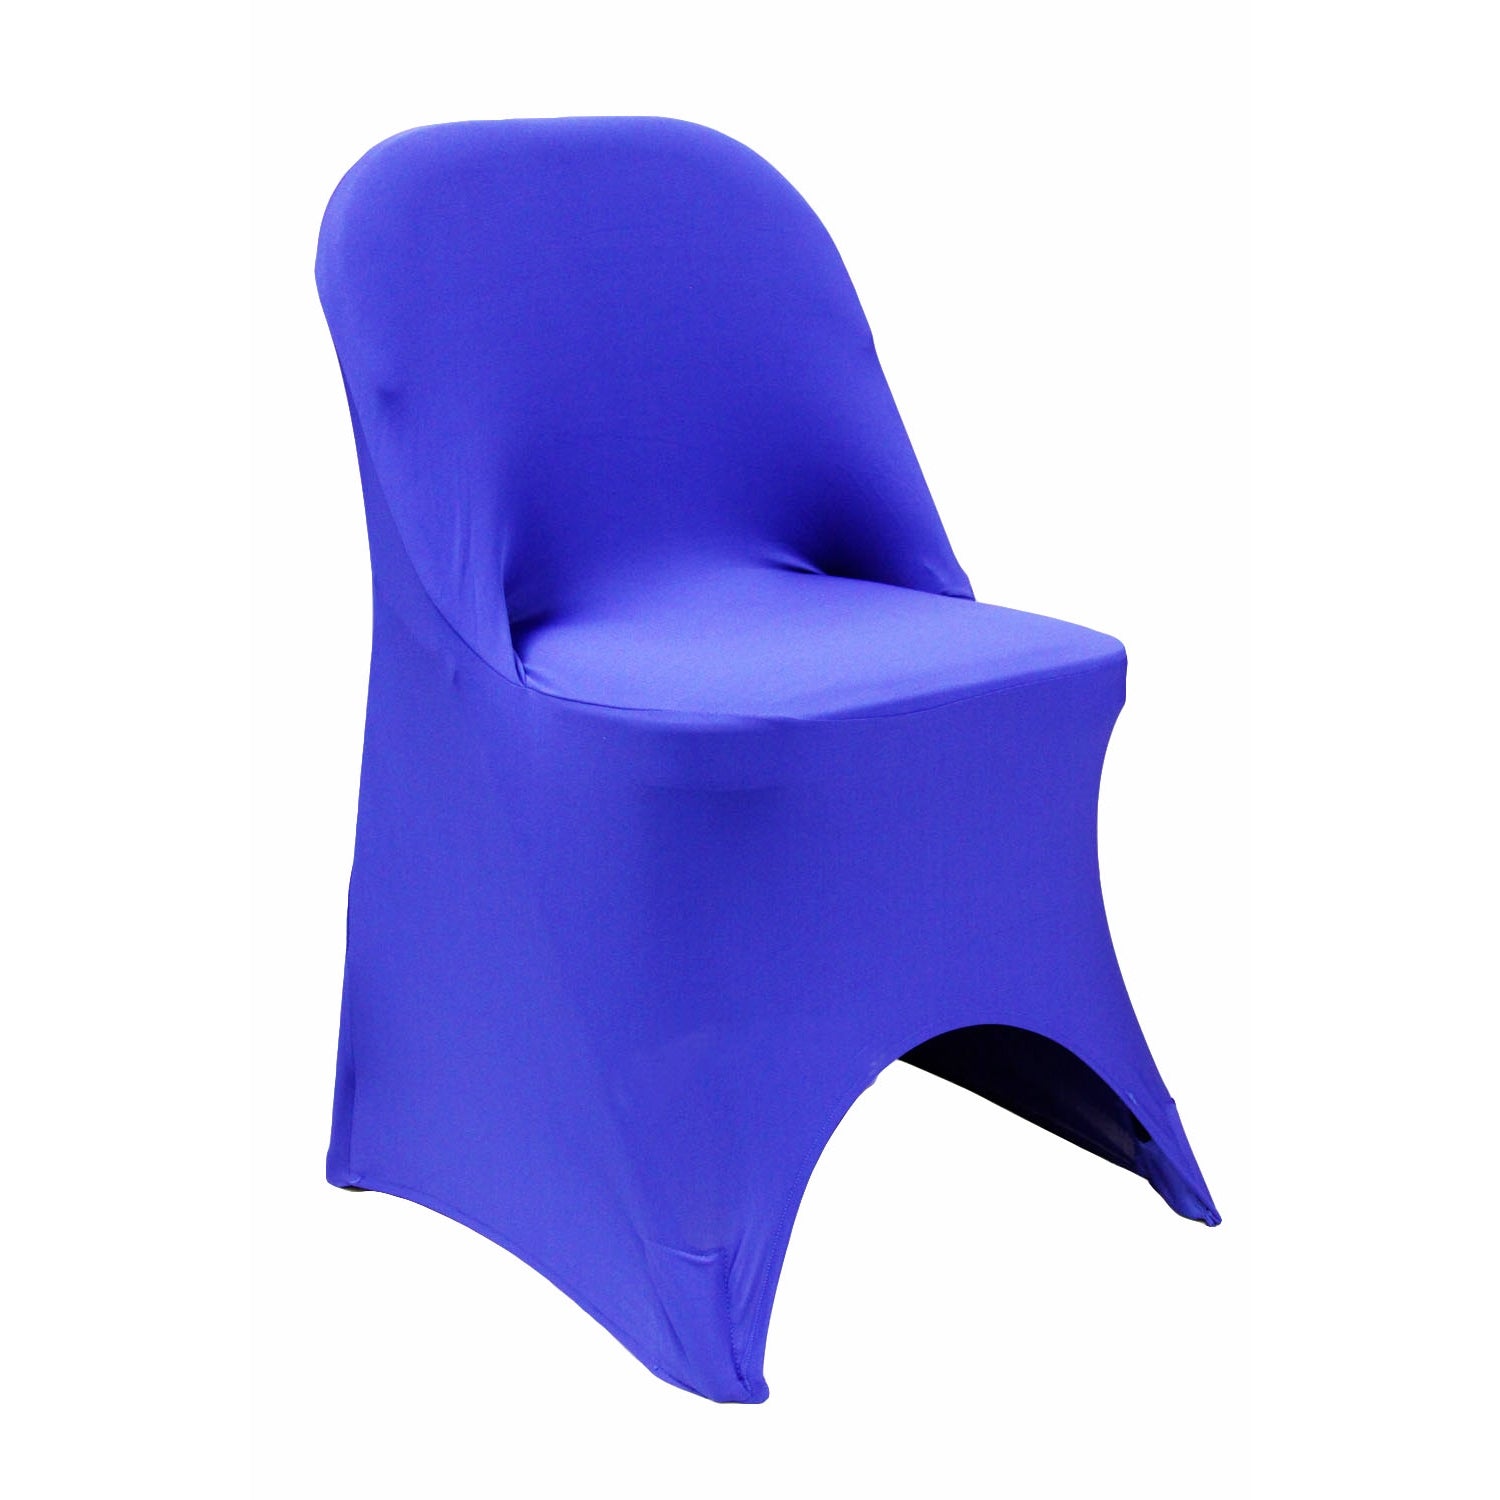 Folding Spandex Chair Cover - Royal Blue - CV Linens